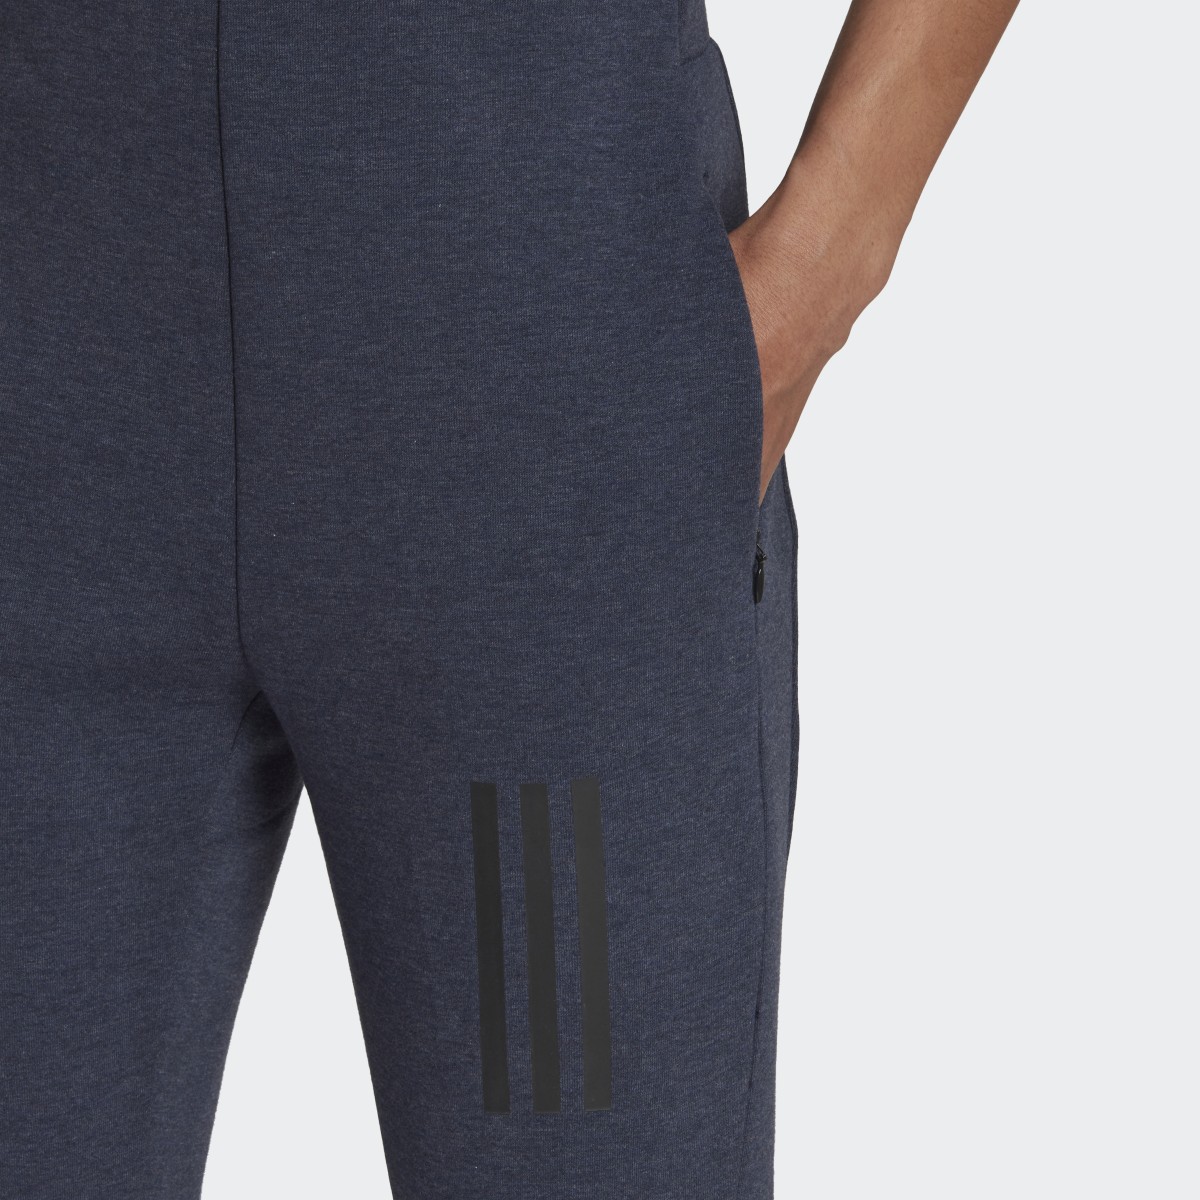 Adidas Mission Victory Slim-Fit High-Waist Pants. 5